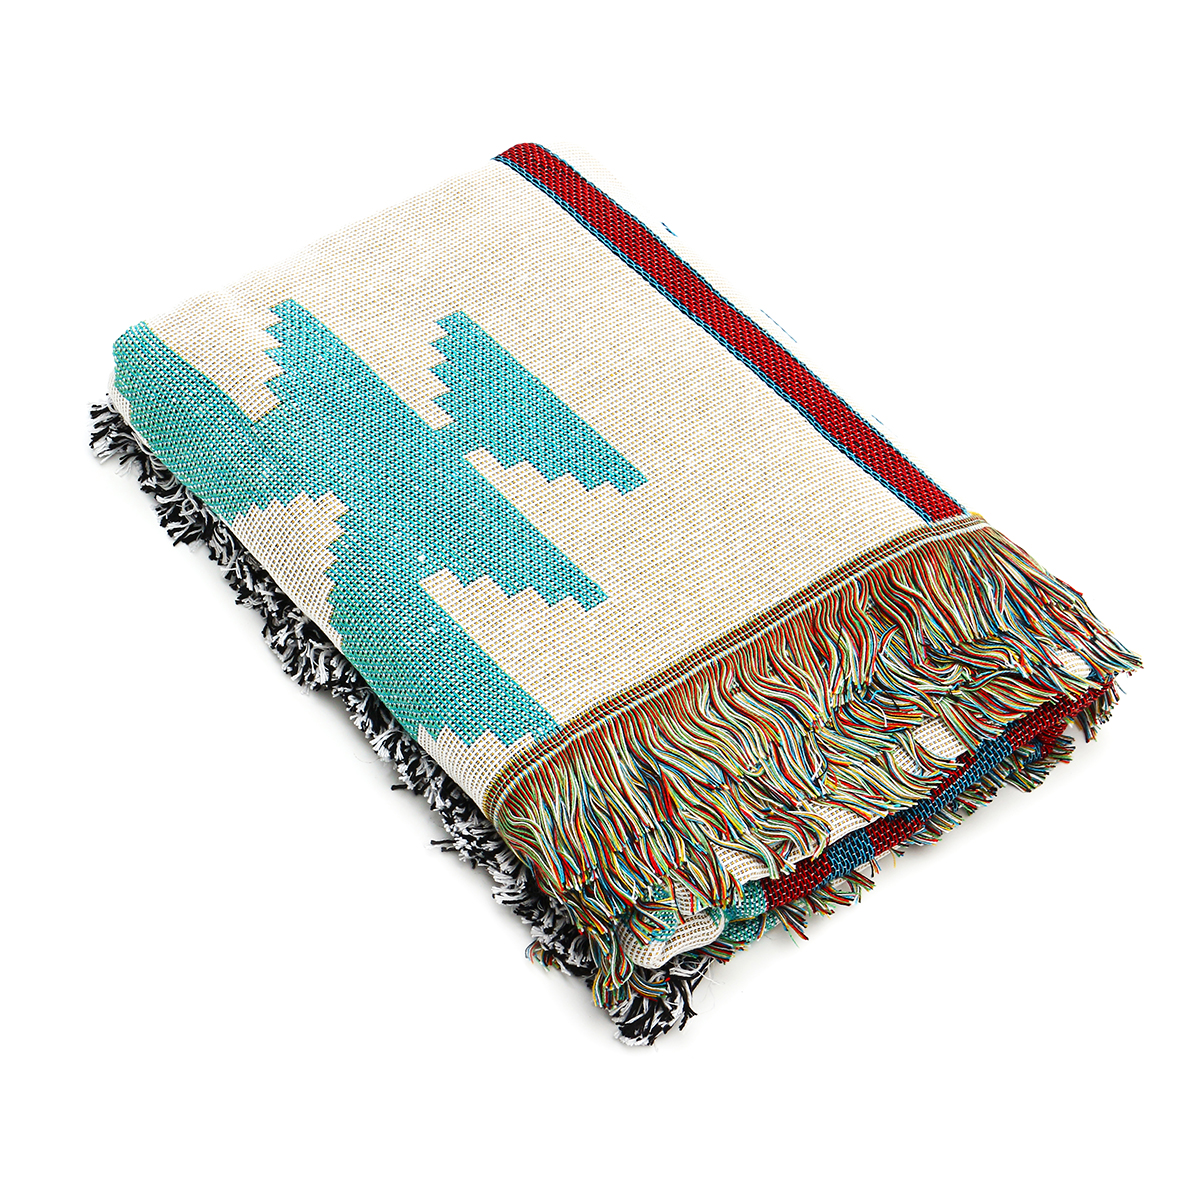 Retro-Navajo-American-Style-Geometric-Popcap-Upholstery-Leisure-Carpet-Air-Conditioning-Sofa-Blanket-1634170-7